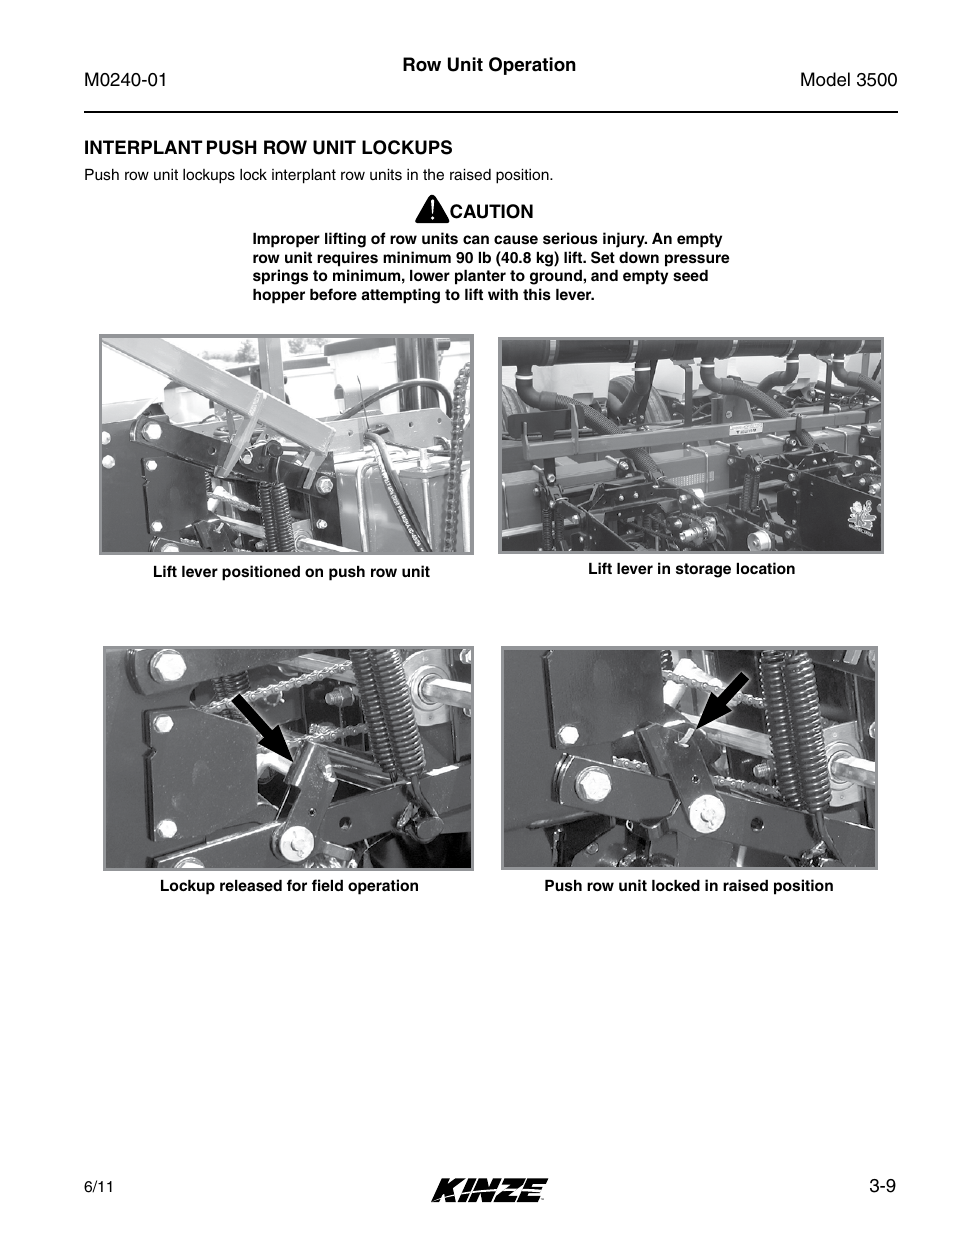 Interplant push row unit lockups, Interplant, Push row unit lockups -9 | Kinze 3500 Lift and Rotate Planter Rev. 7/14 User Manual | Page 43 / 140